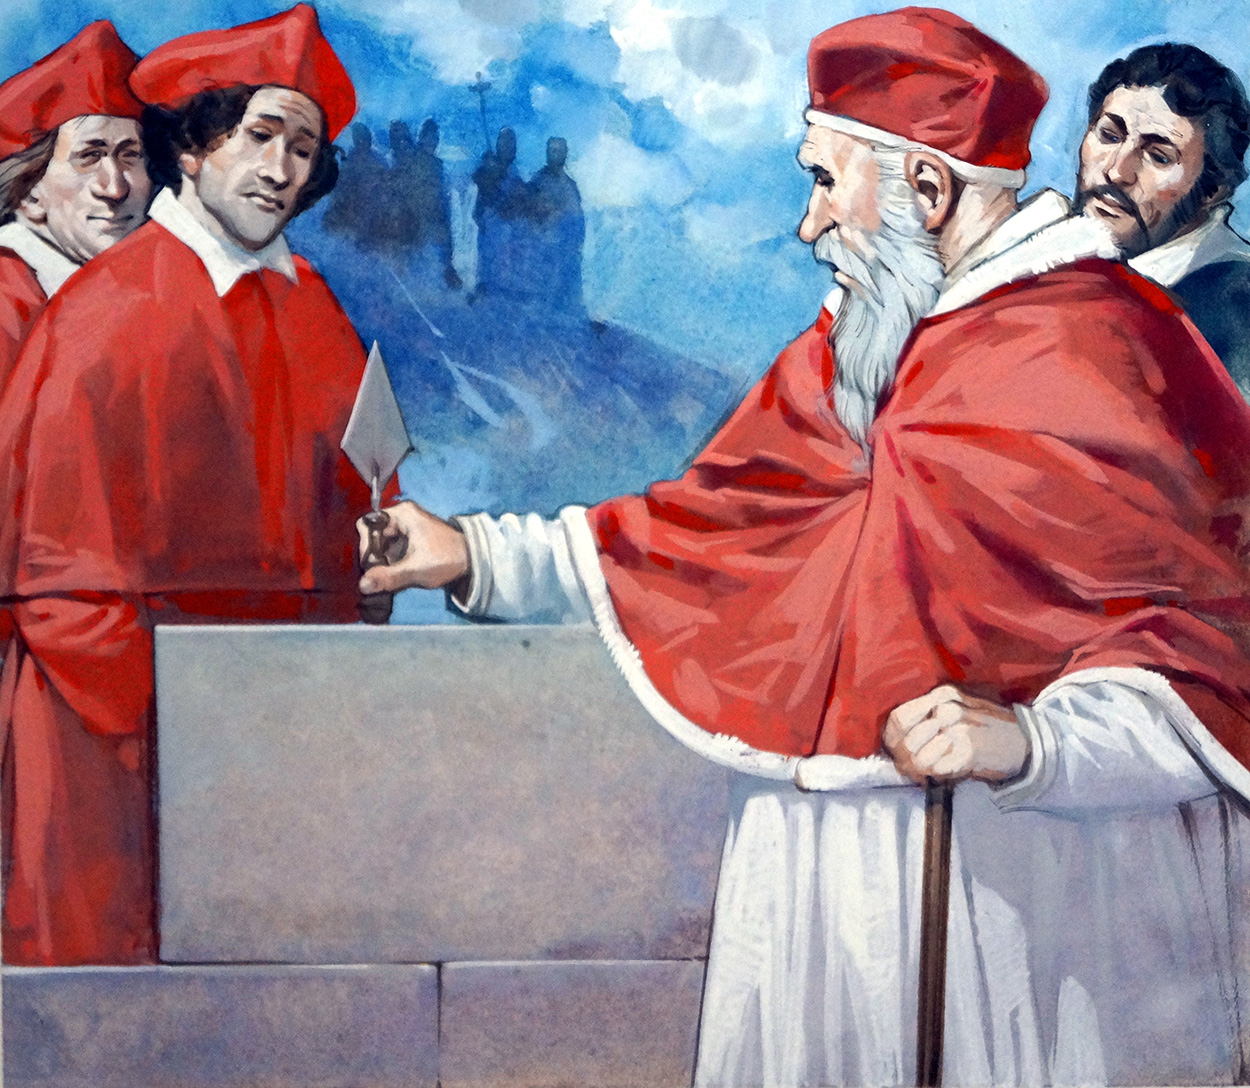 Pope Julius II (Original) art by Angus McBride Art at The Illustration Art Gallery